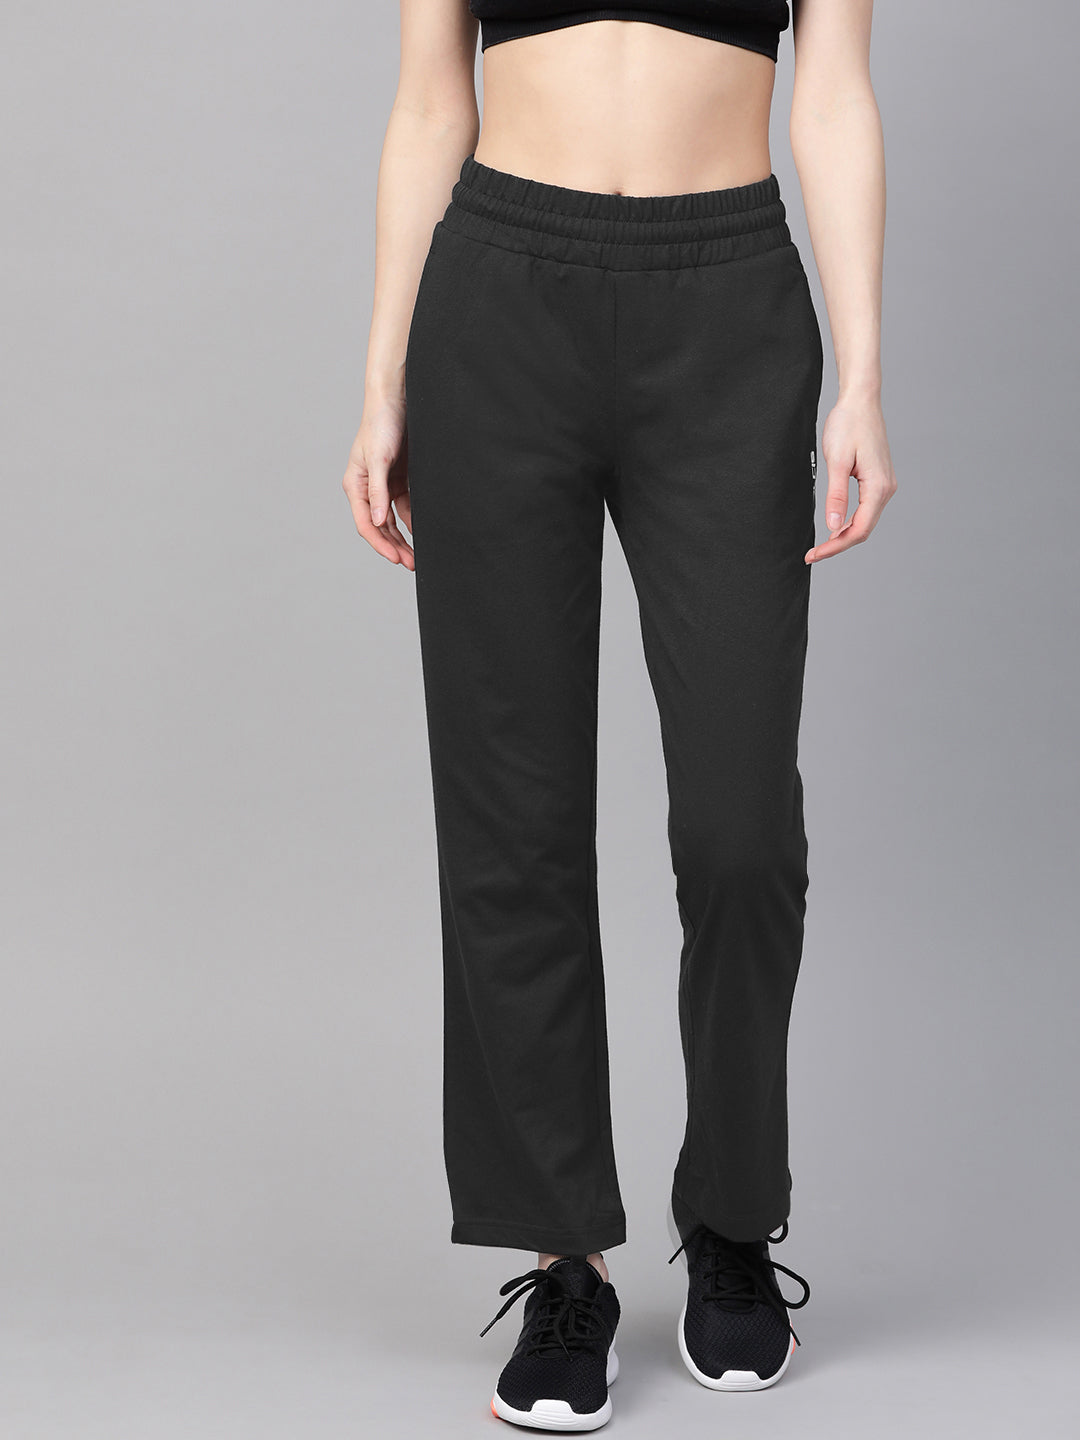 Alcis Women Black Slim Fit Solid Track Pants ALWSTPN06001-S